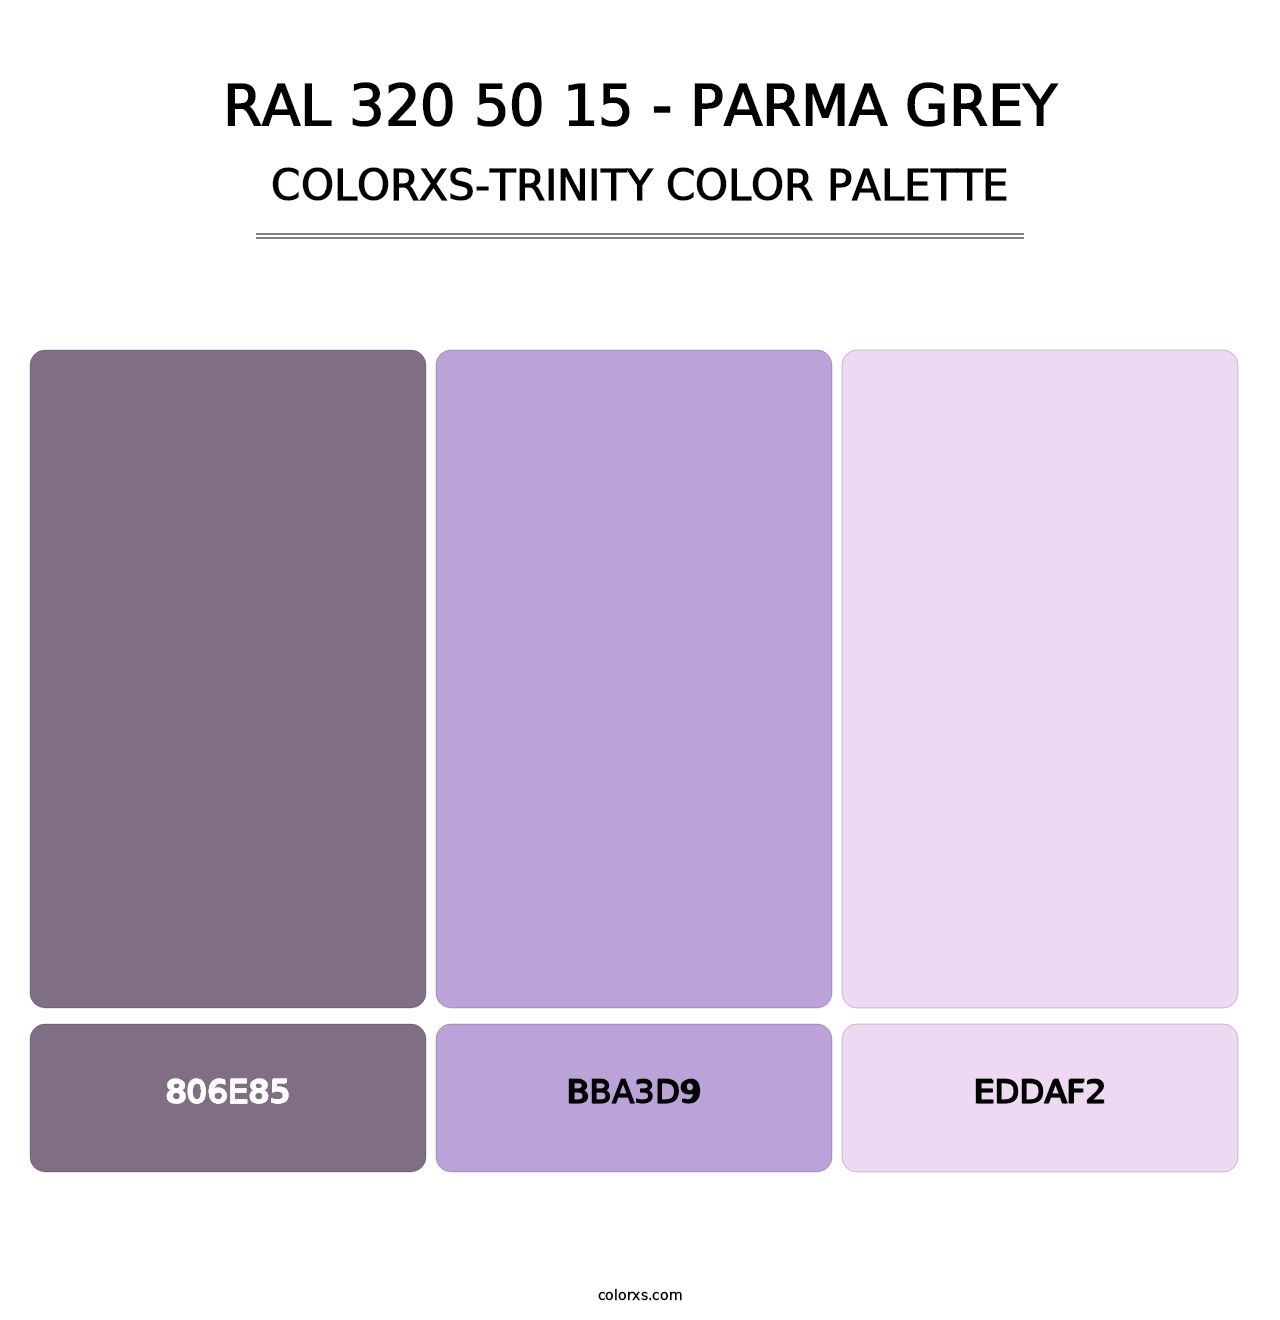 RAL 320 50 15 - Parma Grey - Colorxs Trinity Palette